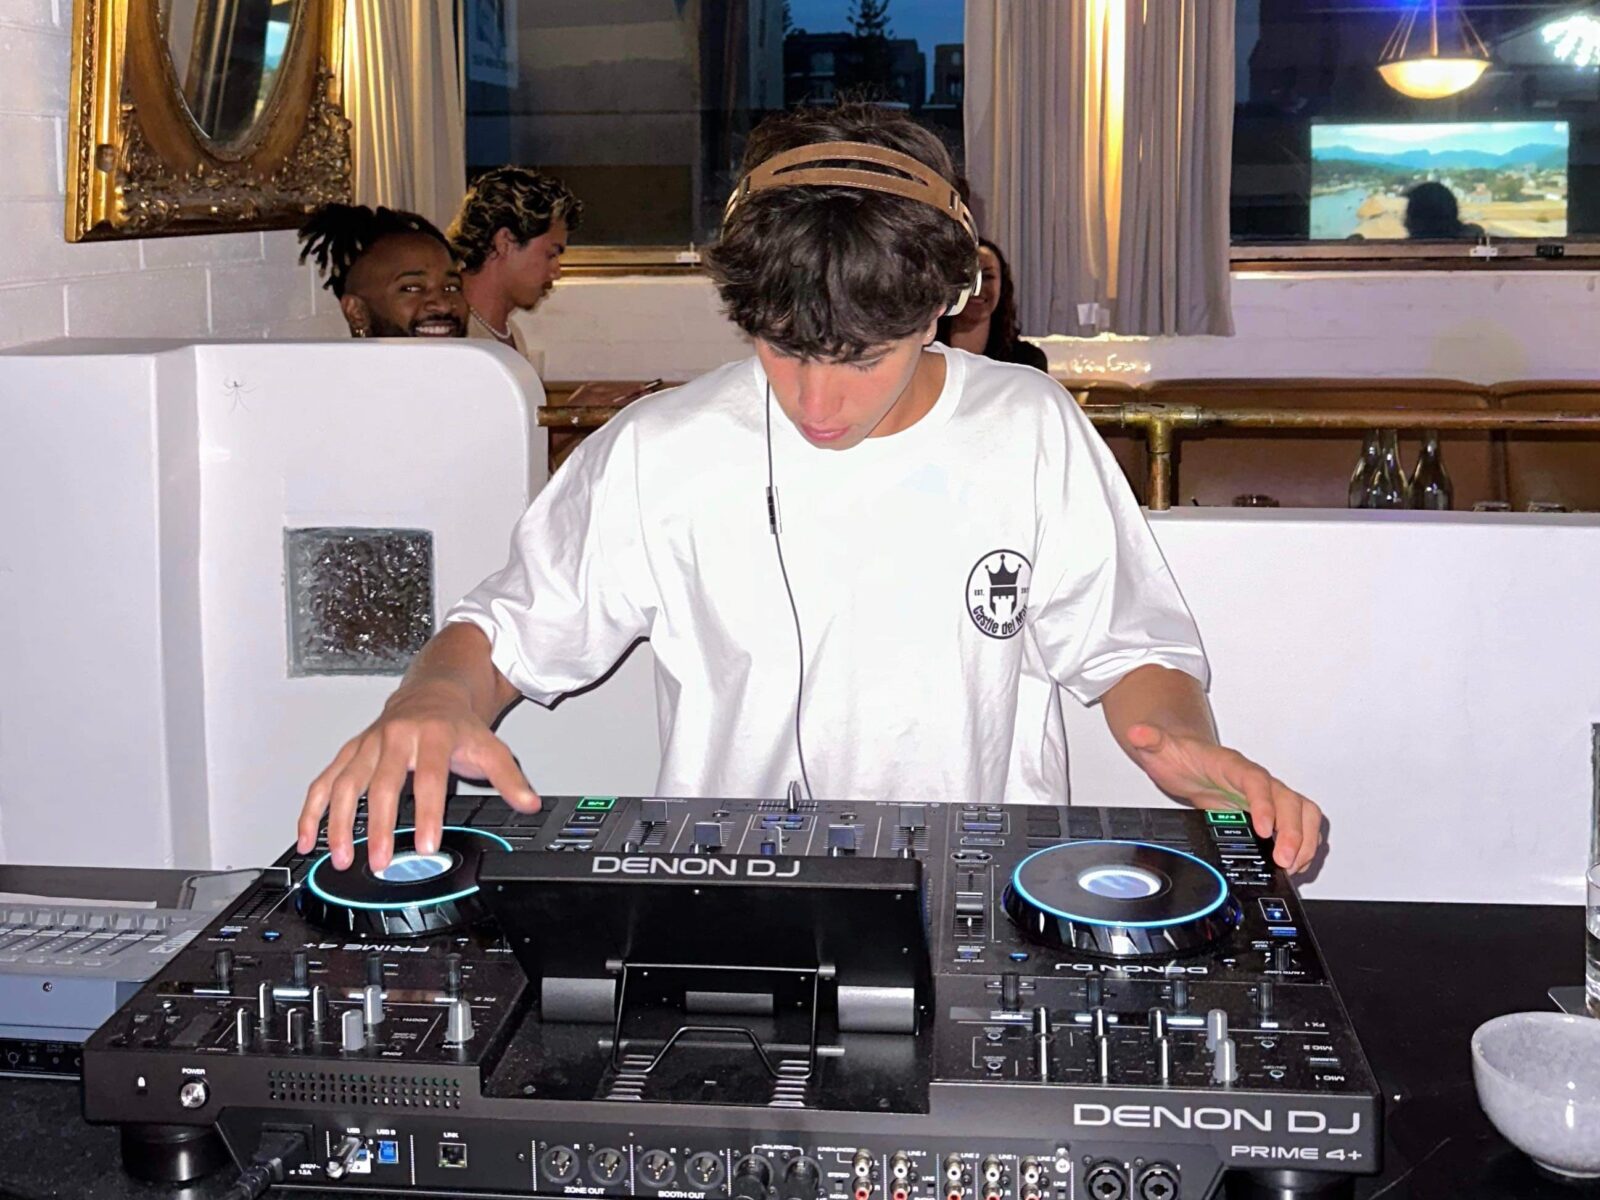 DJ performing on DJ deck